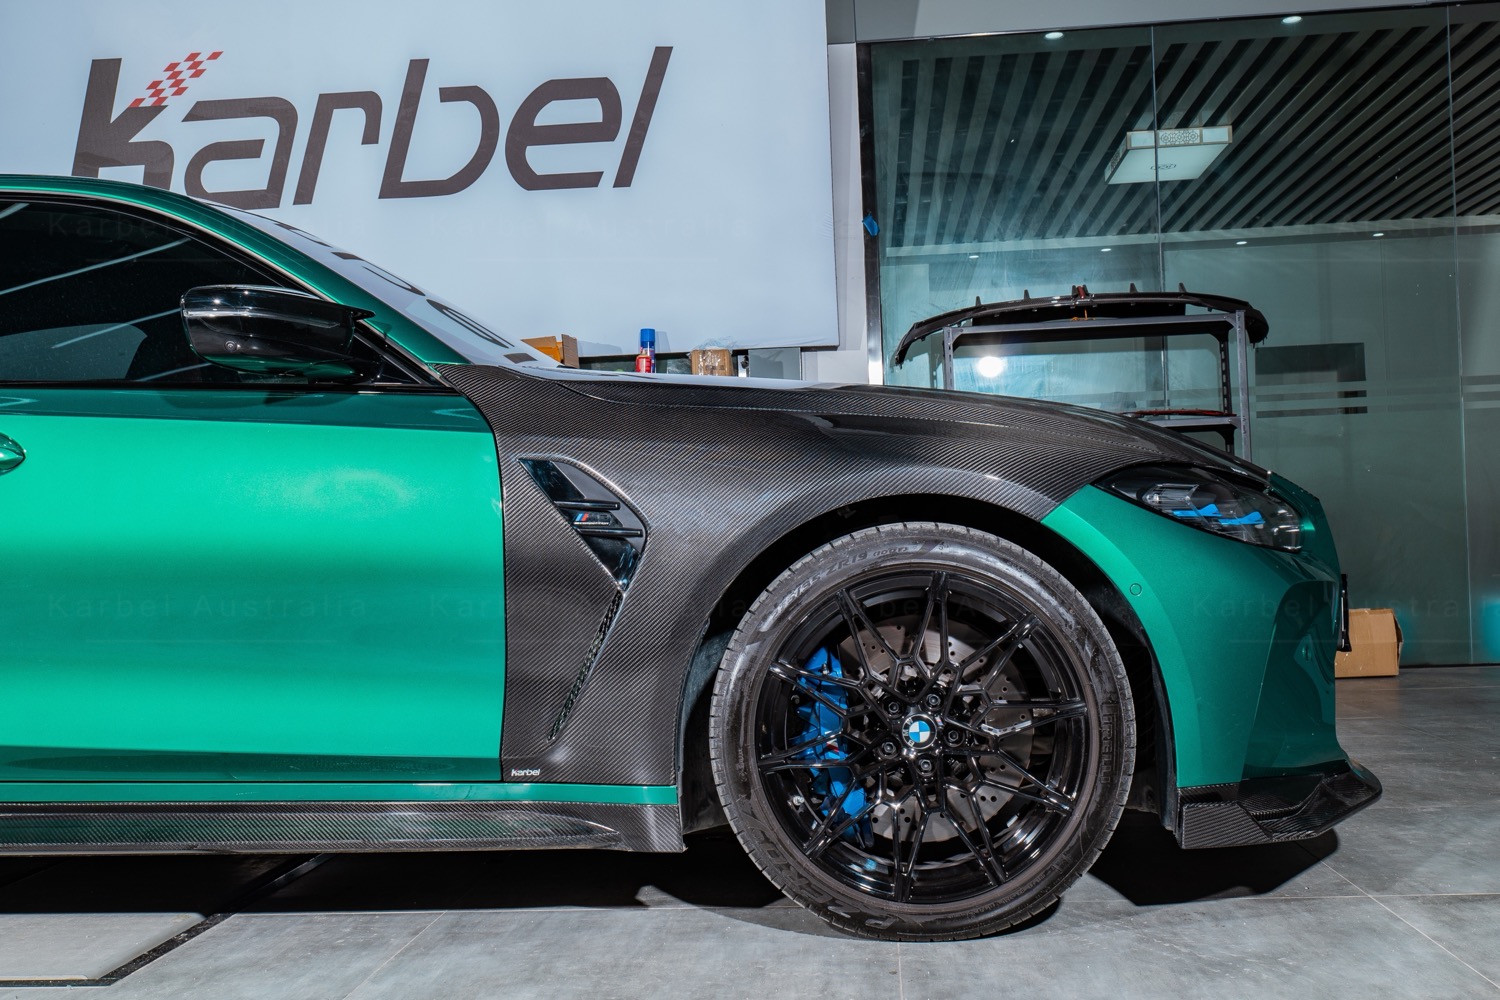 Check price and buy Karbel Carbon Fiber Body kit set for BMW  M3 G80